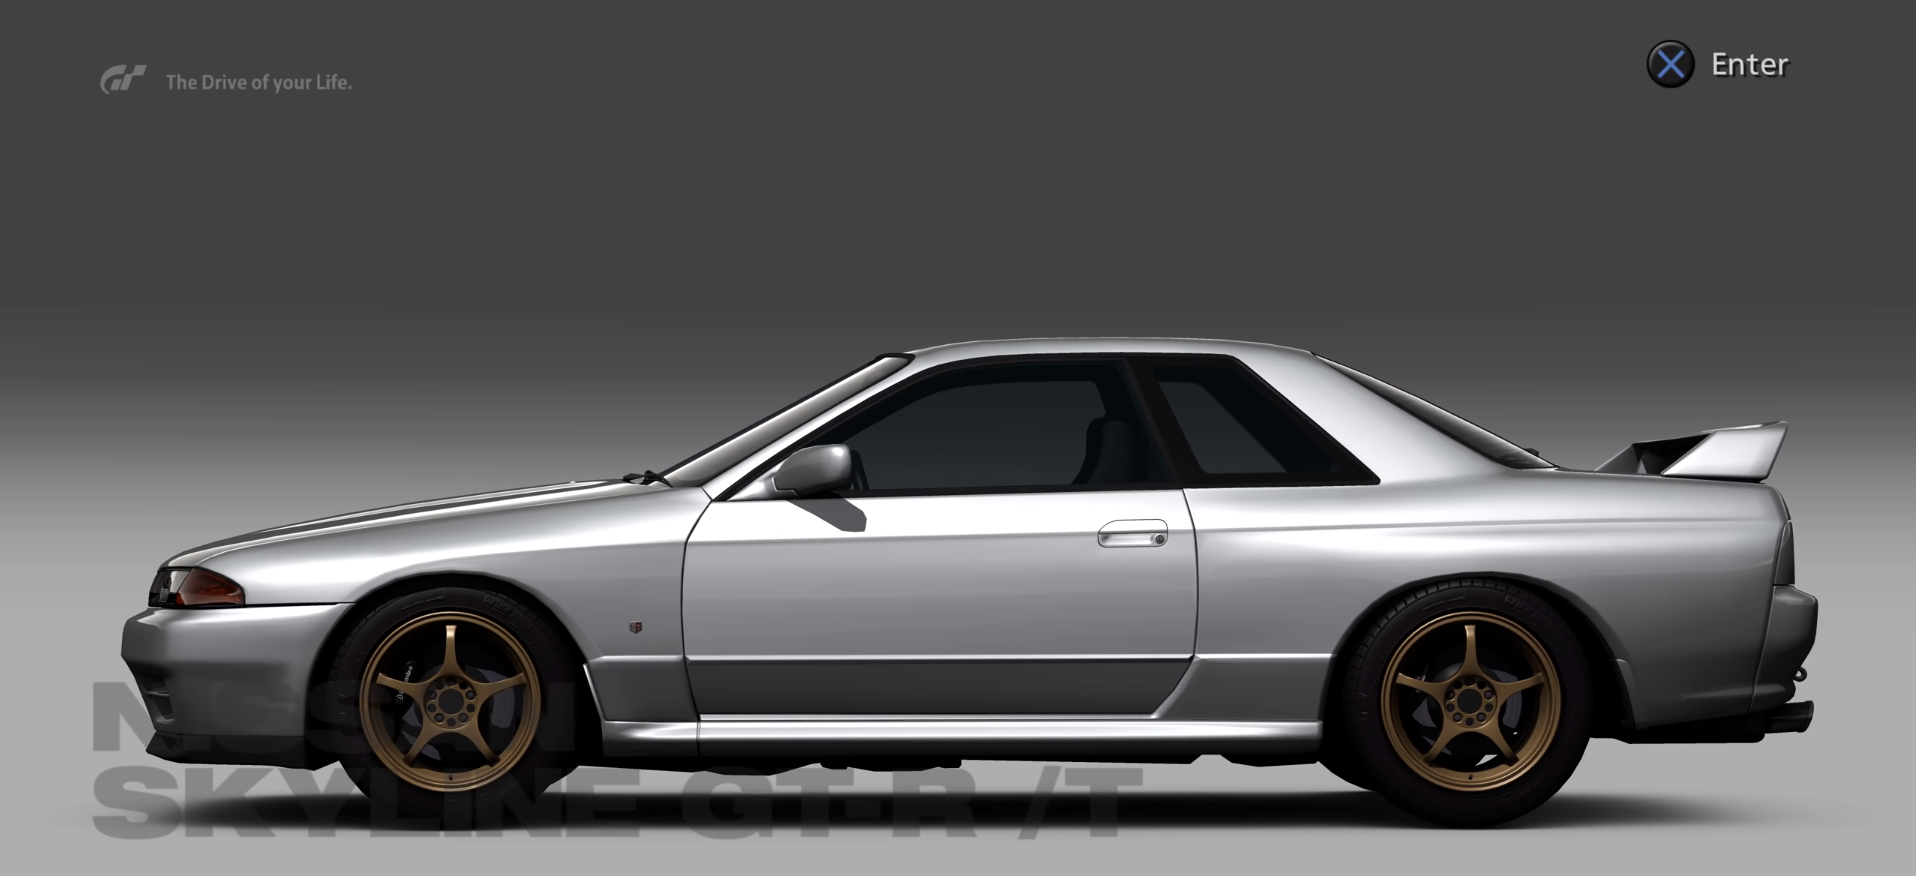 Nissan Skyline GT-R V-Spec Dream Car Turned Reality